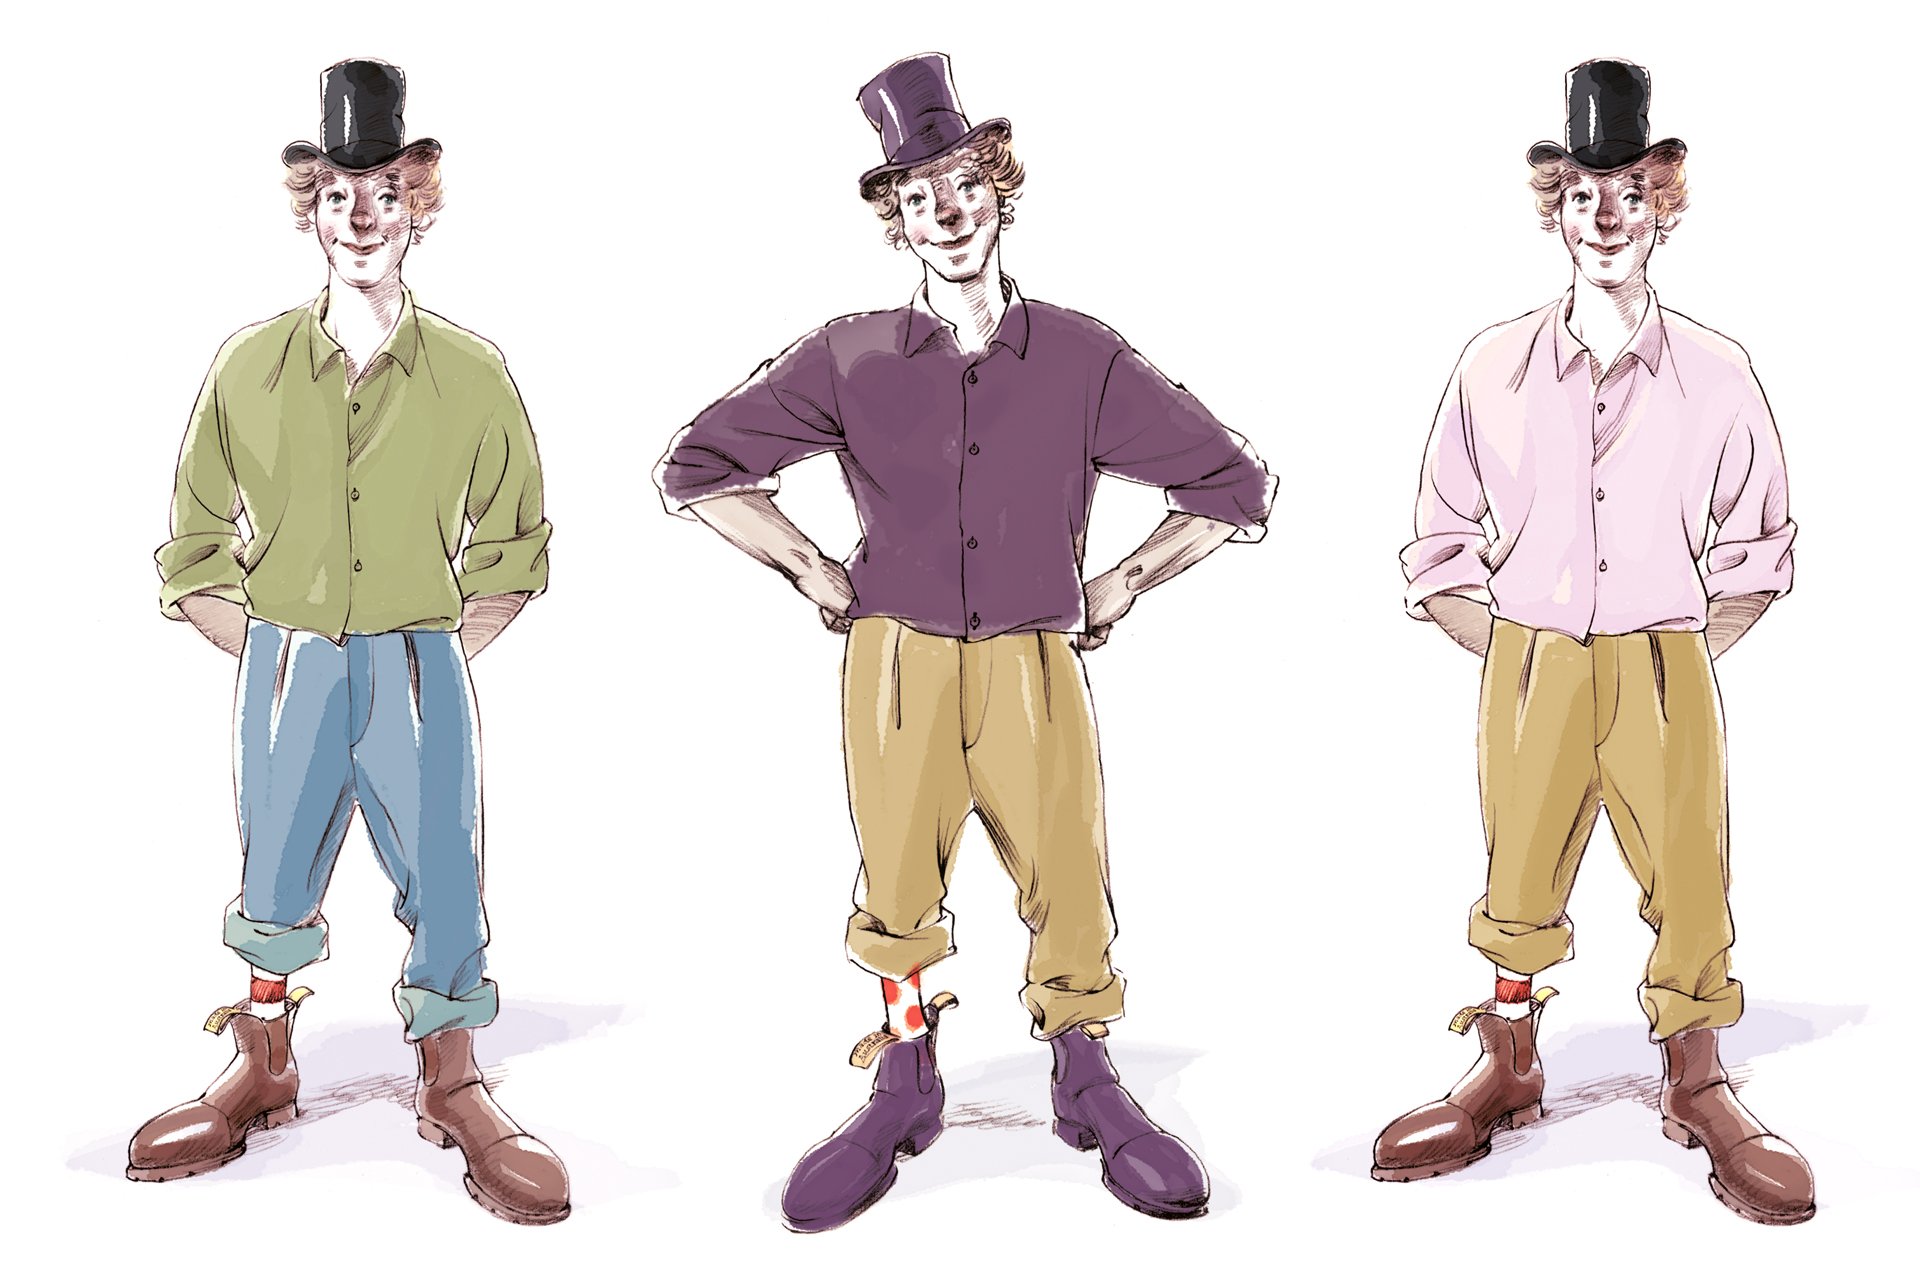 OddOneOut wine illustration 3 clowns